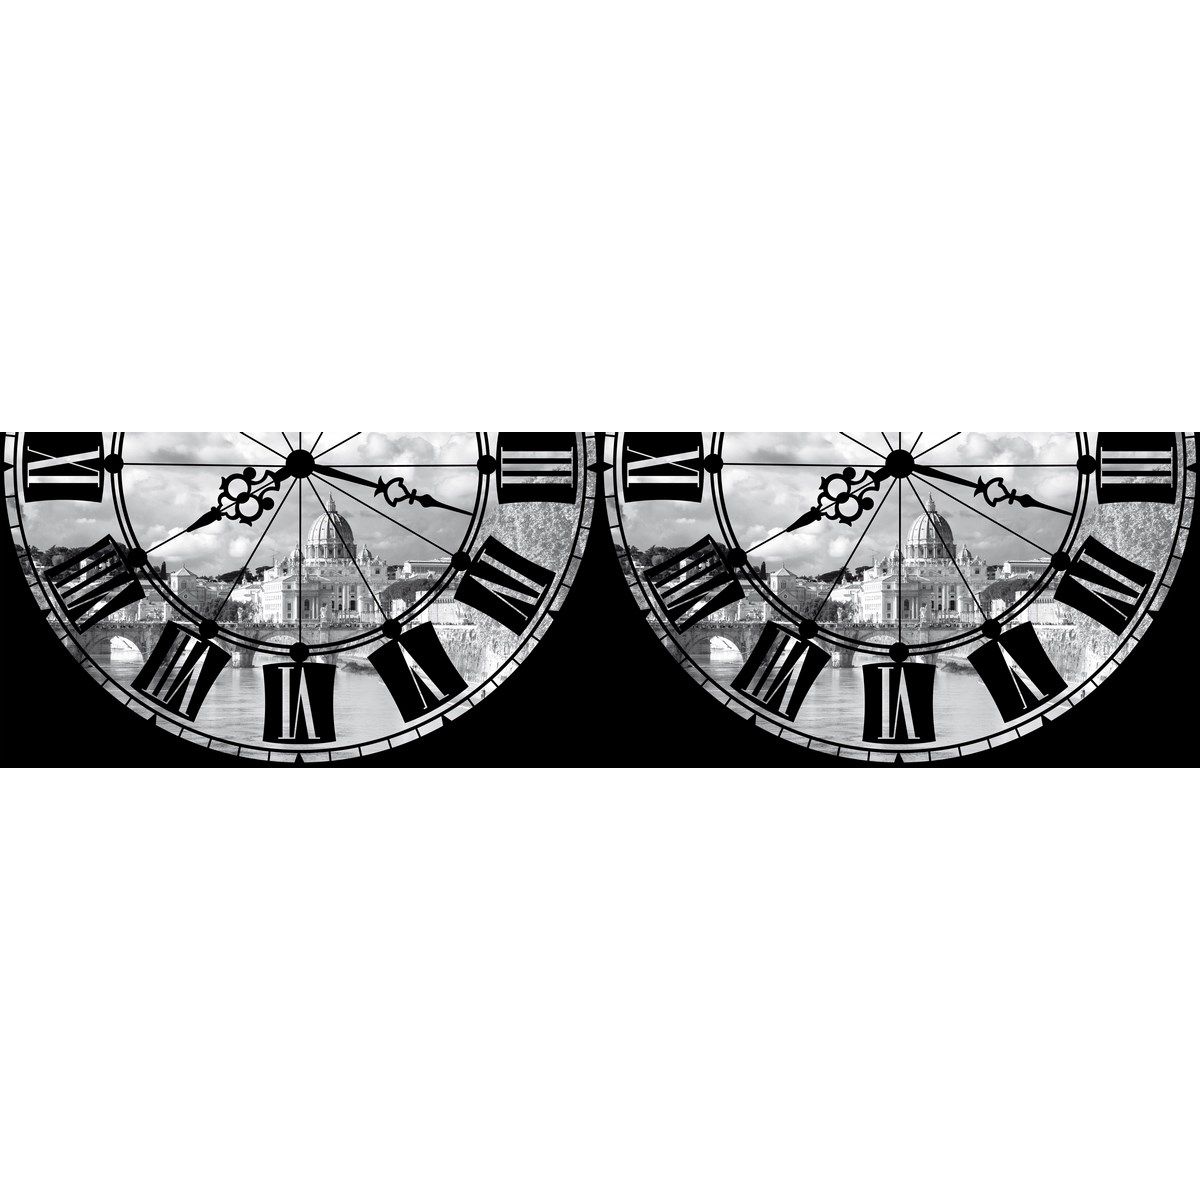 AG Art Samolepicí bordura Římské hodiny, 500 x 14 cm  - GLIX DECO s.r.o.